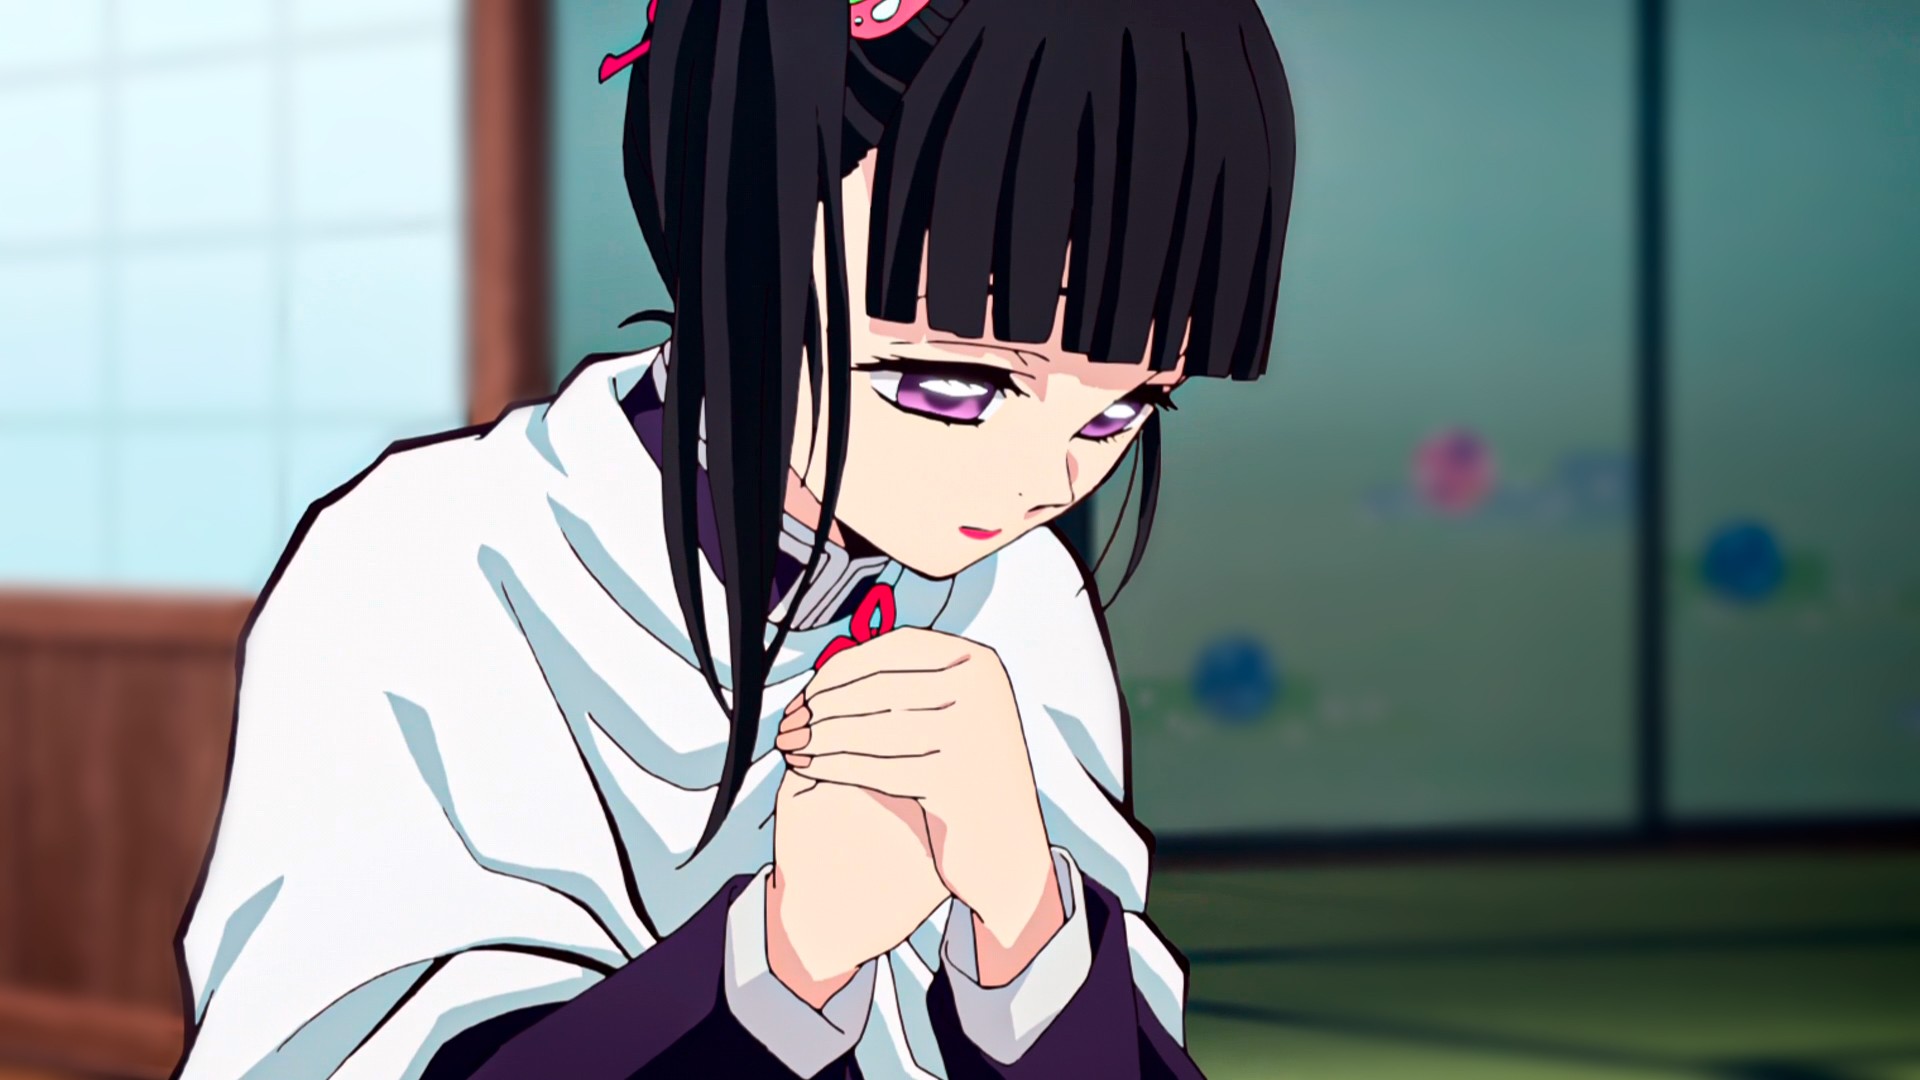 Demon Slayer Kimetsu no Yaiba Sitting Sad With Background Of Green Wall And Window HD Anime Wallpaper